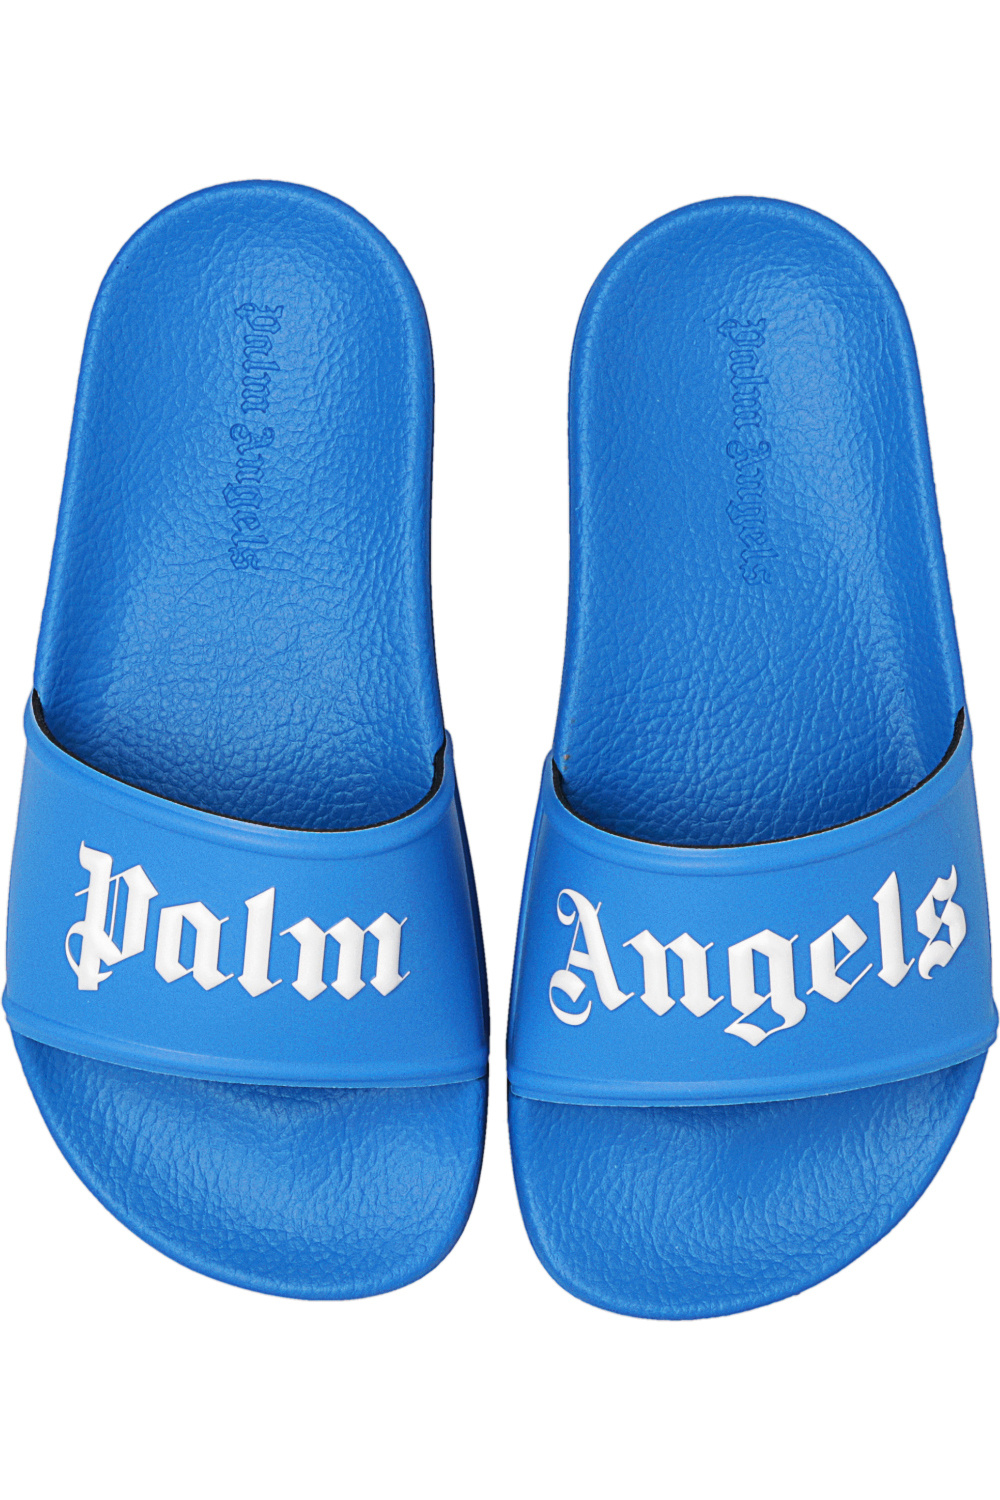 Palm Angels Kids seuss white black women casual shoes 155321-wbk